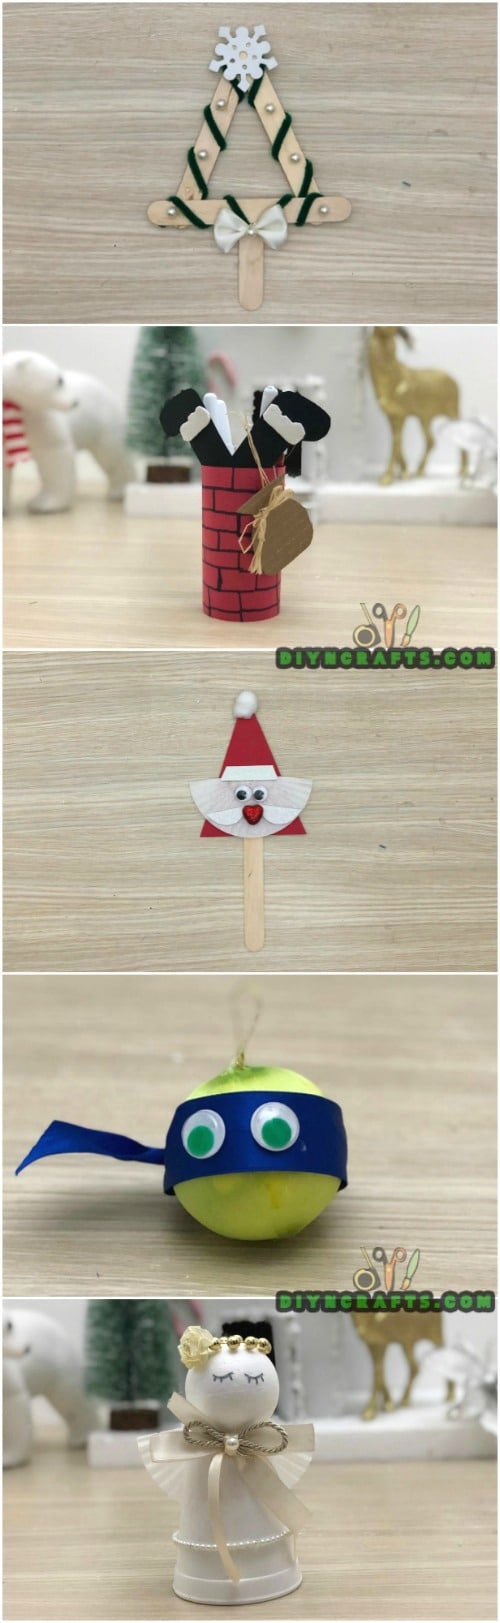 5 Brilliantly Creative DIY Christmas Crafts Anyone Can Make